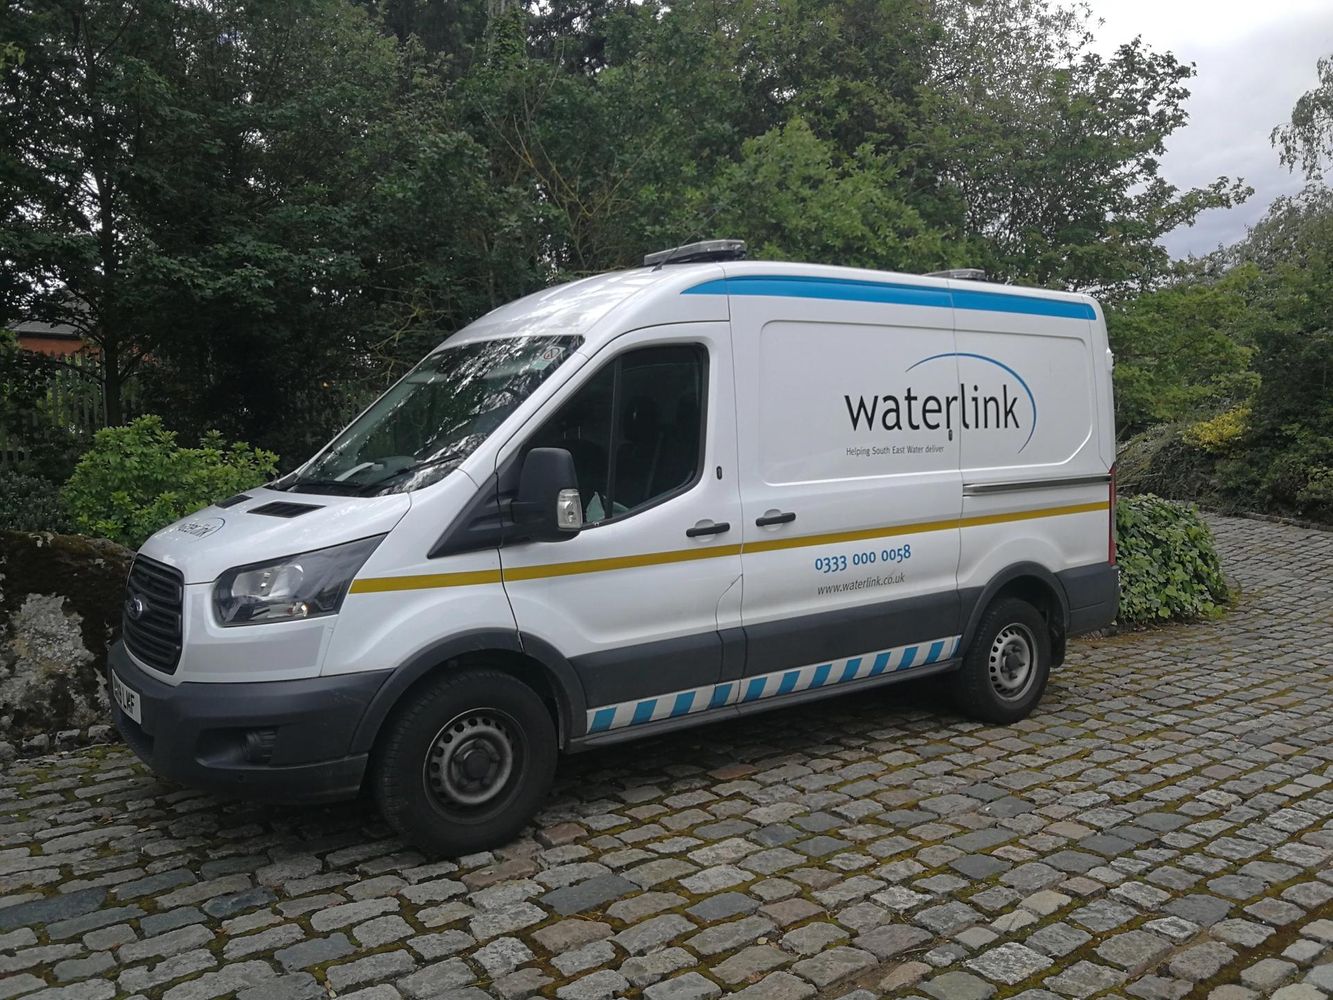 Decorative image of a Waterlink van